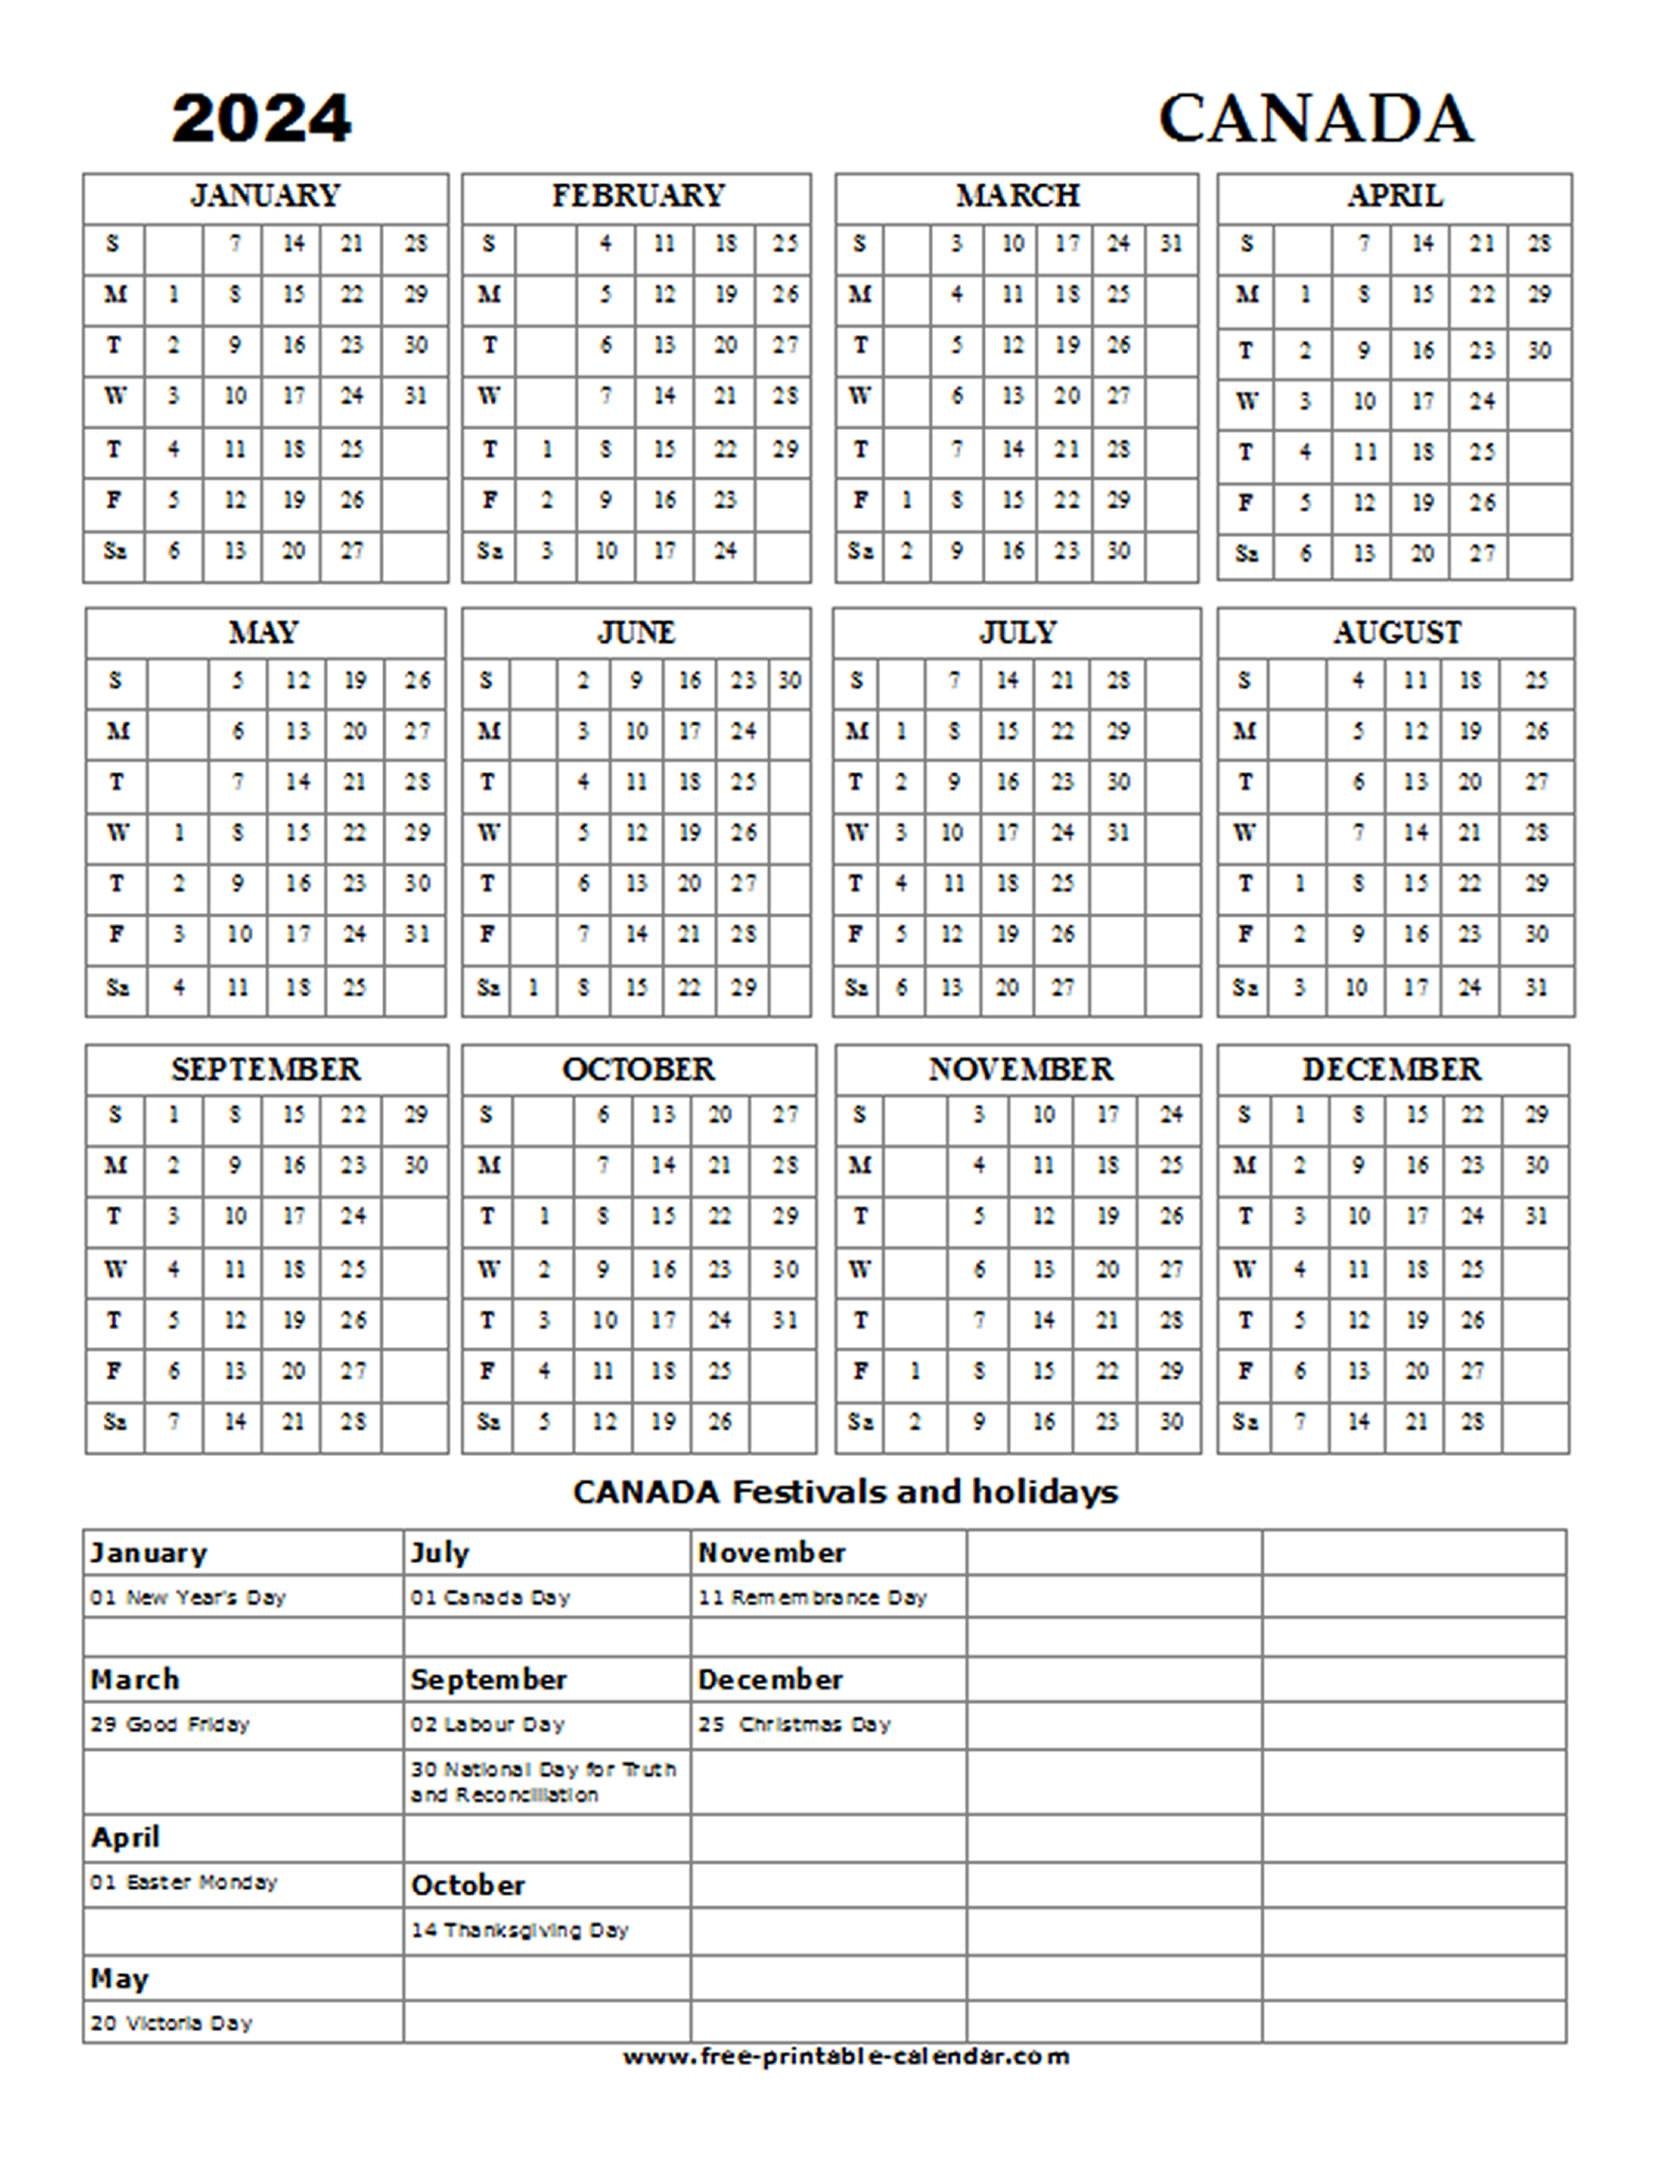 2024 Canada Holiday Calendar - Free-Printable-Calendar intended for Free Printable Calendar 2024 By Month Canada